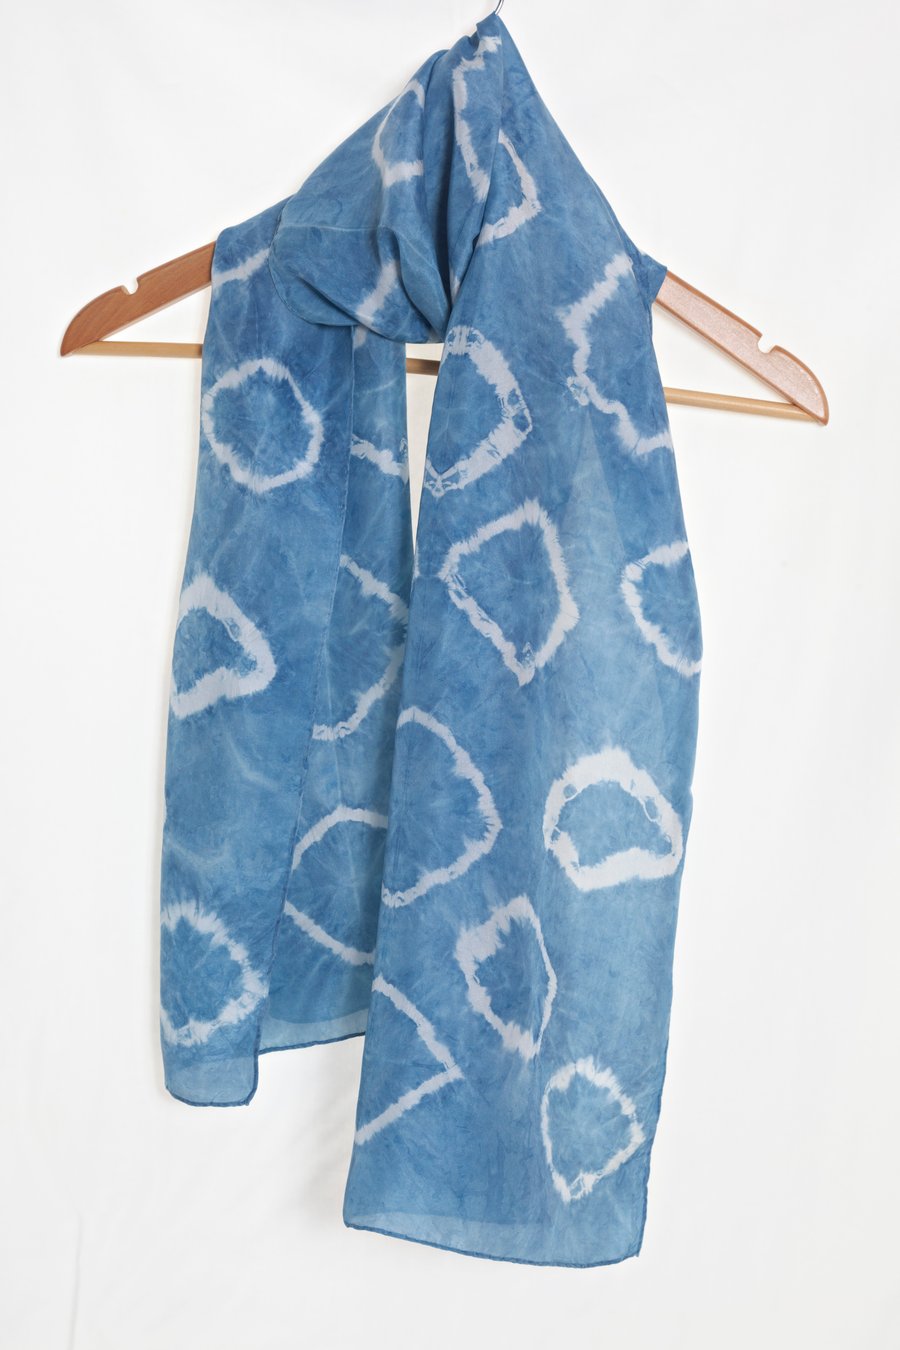 Indigo dyed shibori  silk scarf